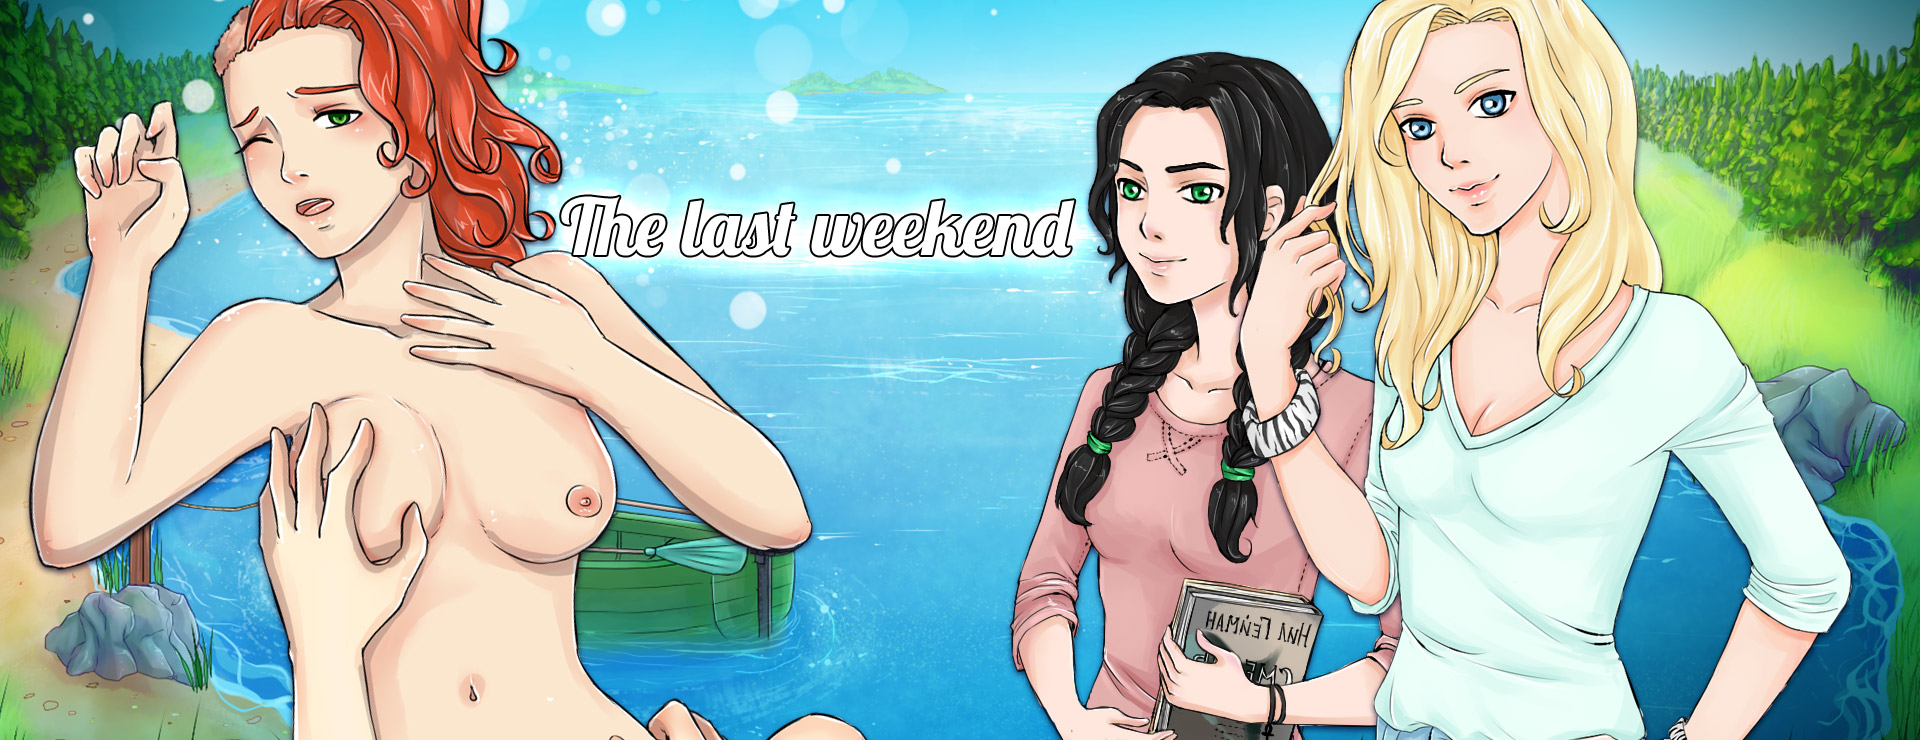 The Last Weekend - Visual Novel Game